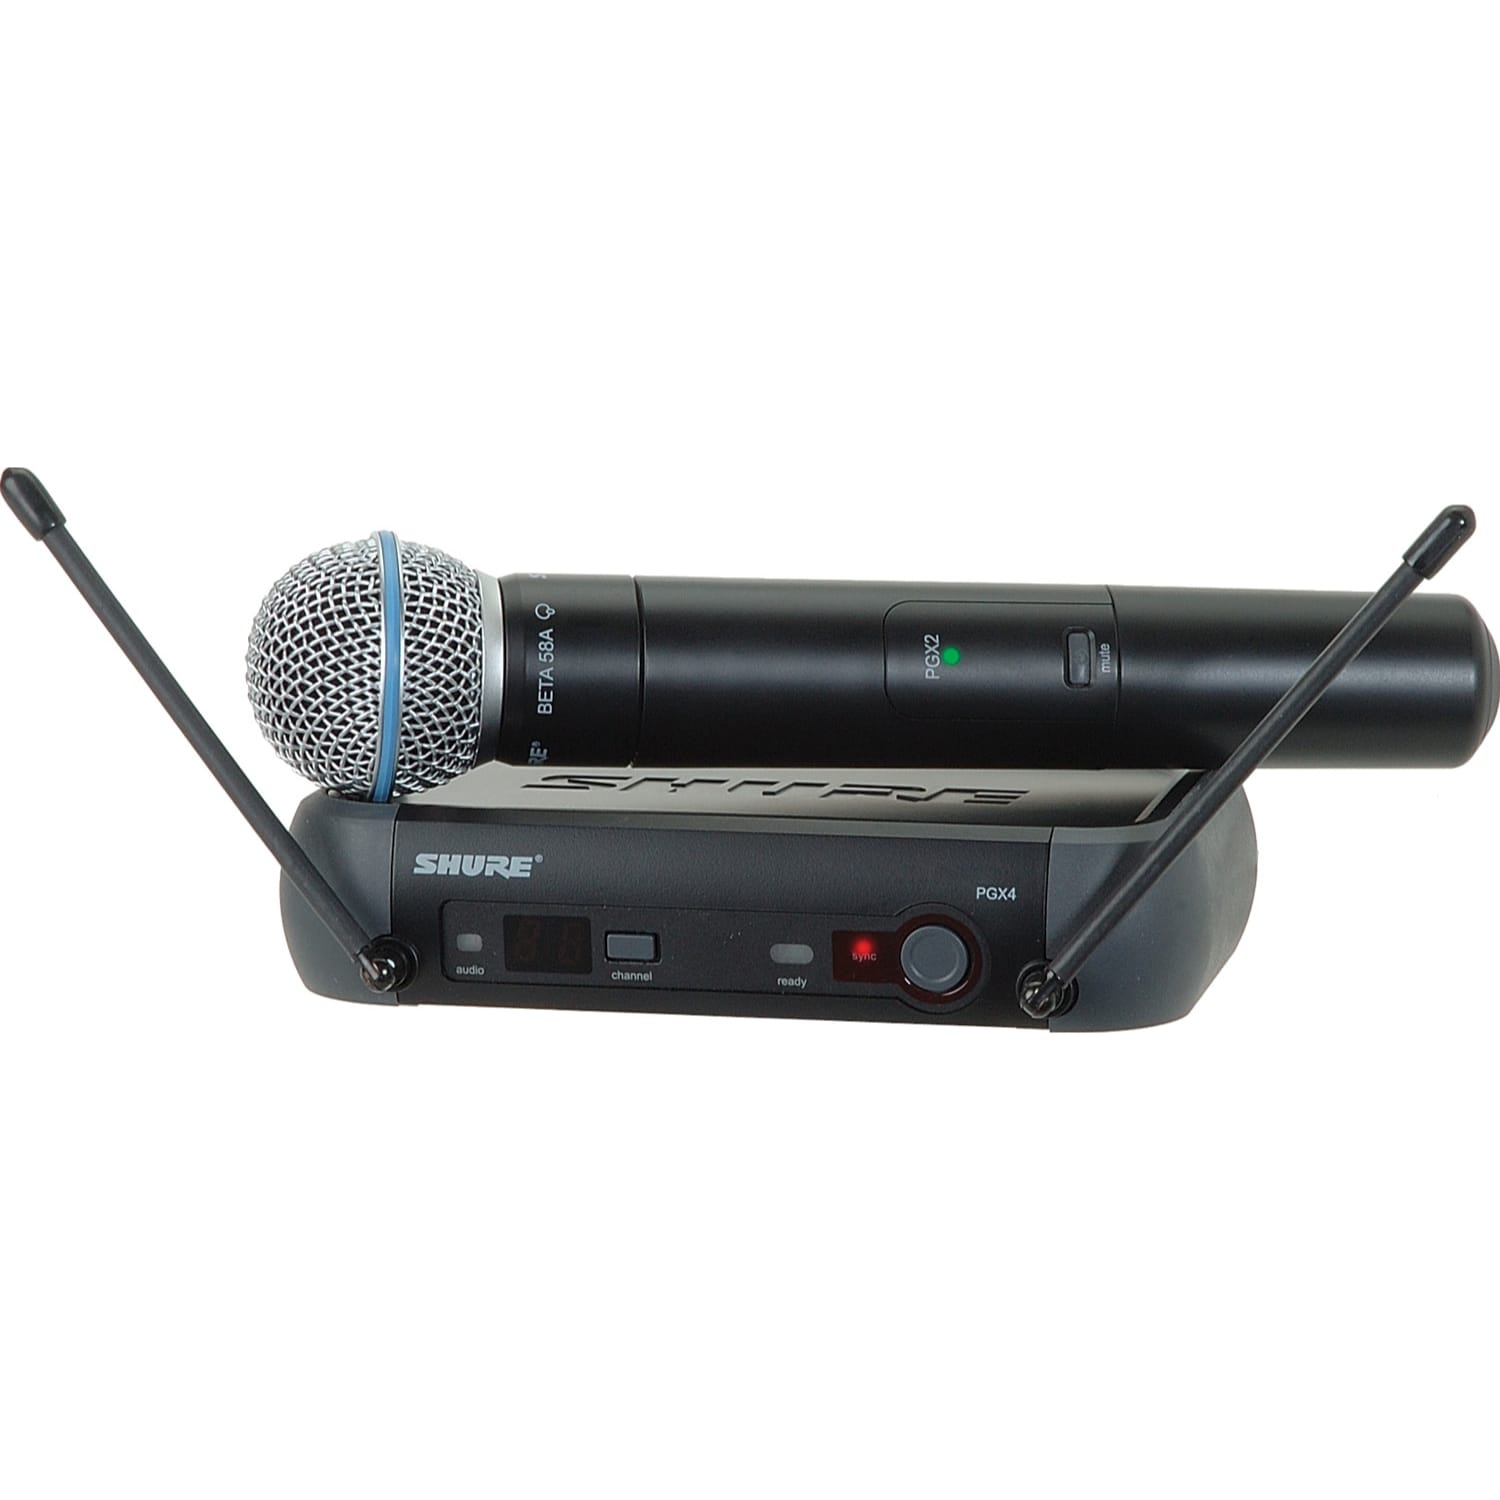 Microfon wireless cu receptor ,2 antene , cu iesire jacj 6,3mm